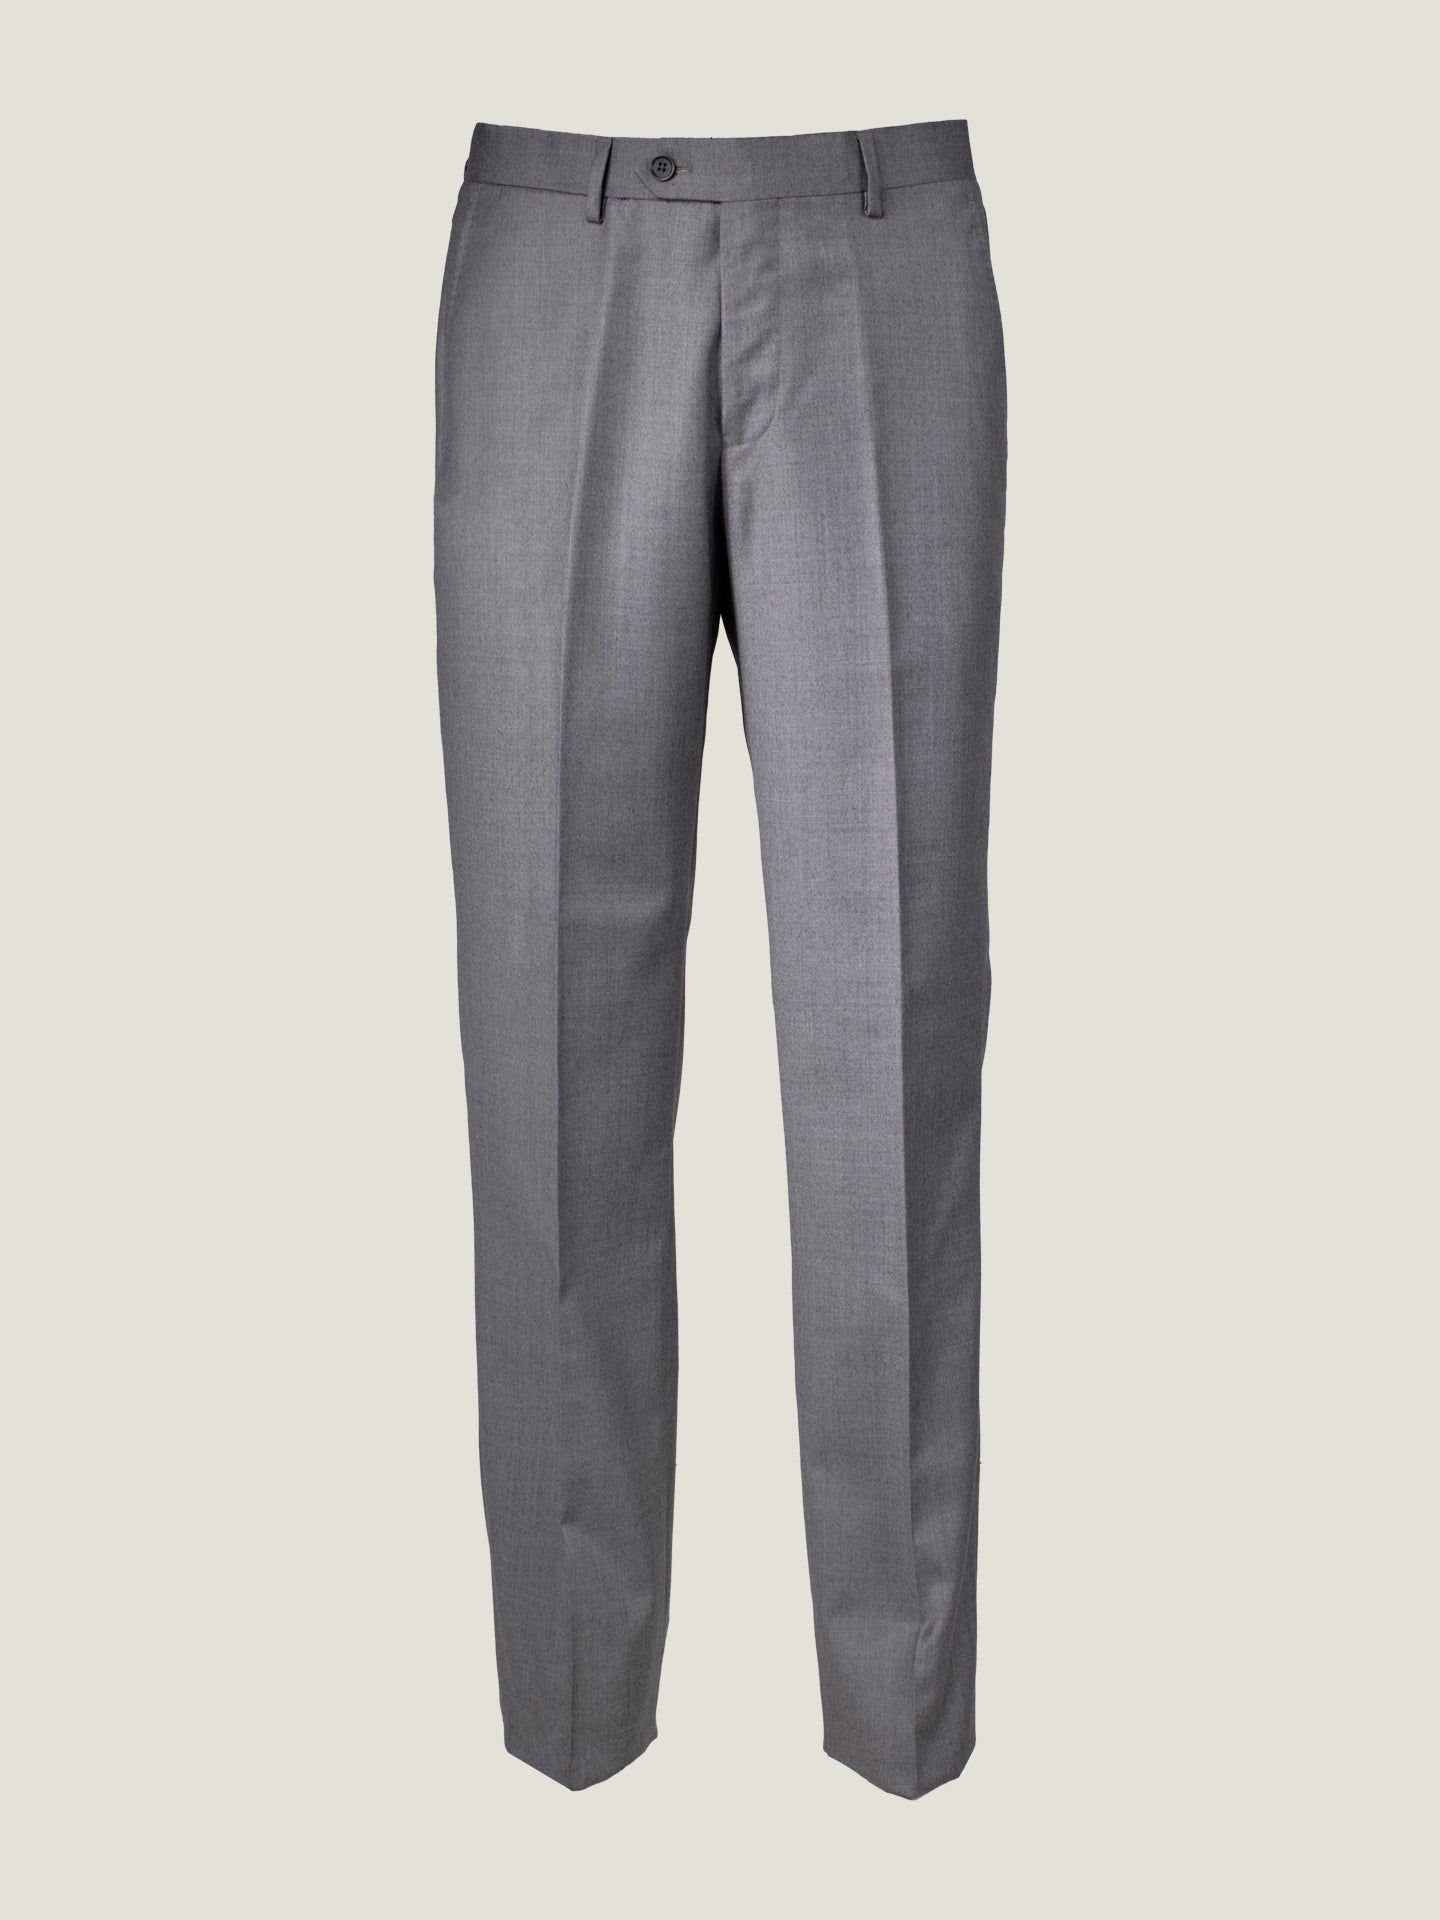 Essential Grey Suit Trouser